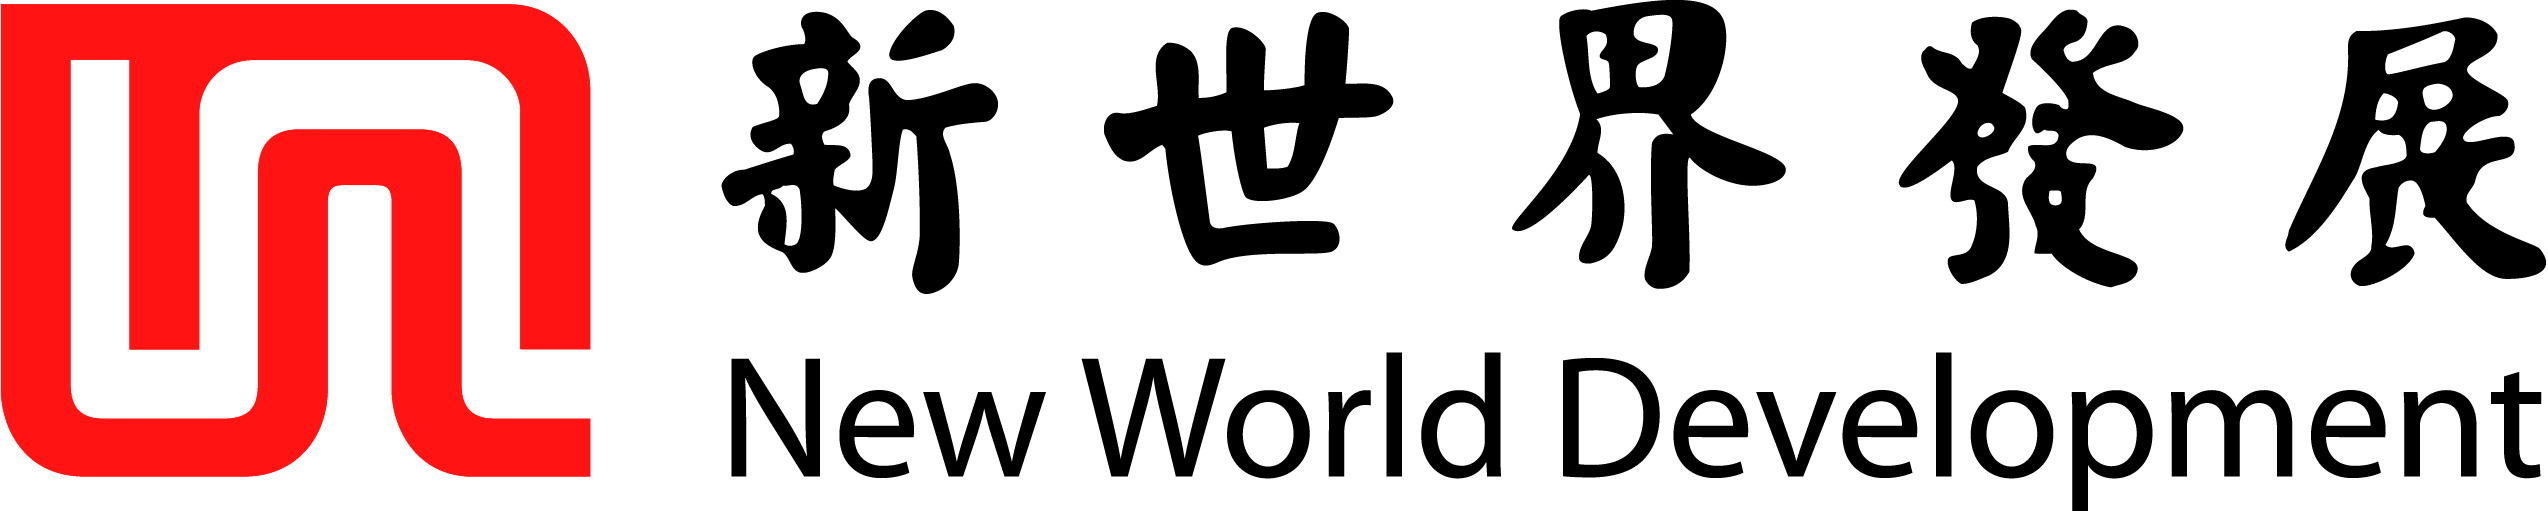 NWD Short Horizontal Logo Bilingual 1.jpg